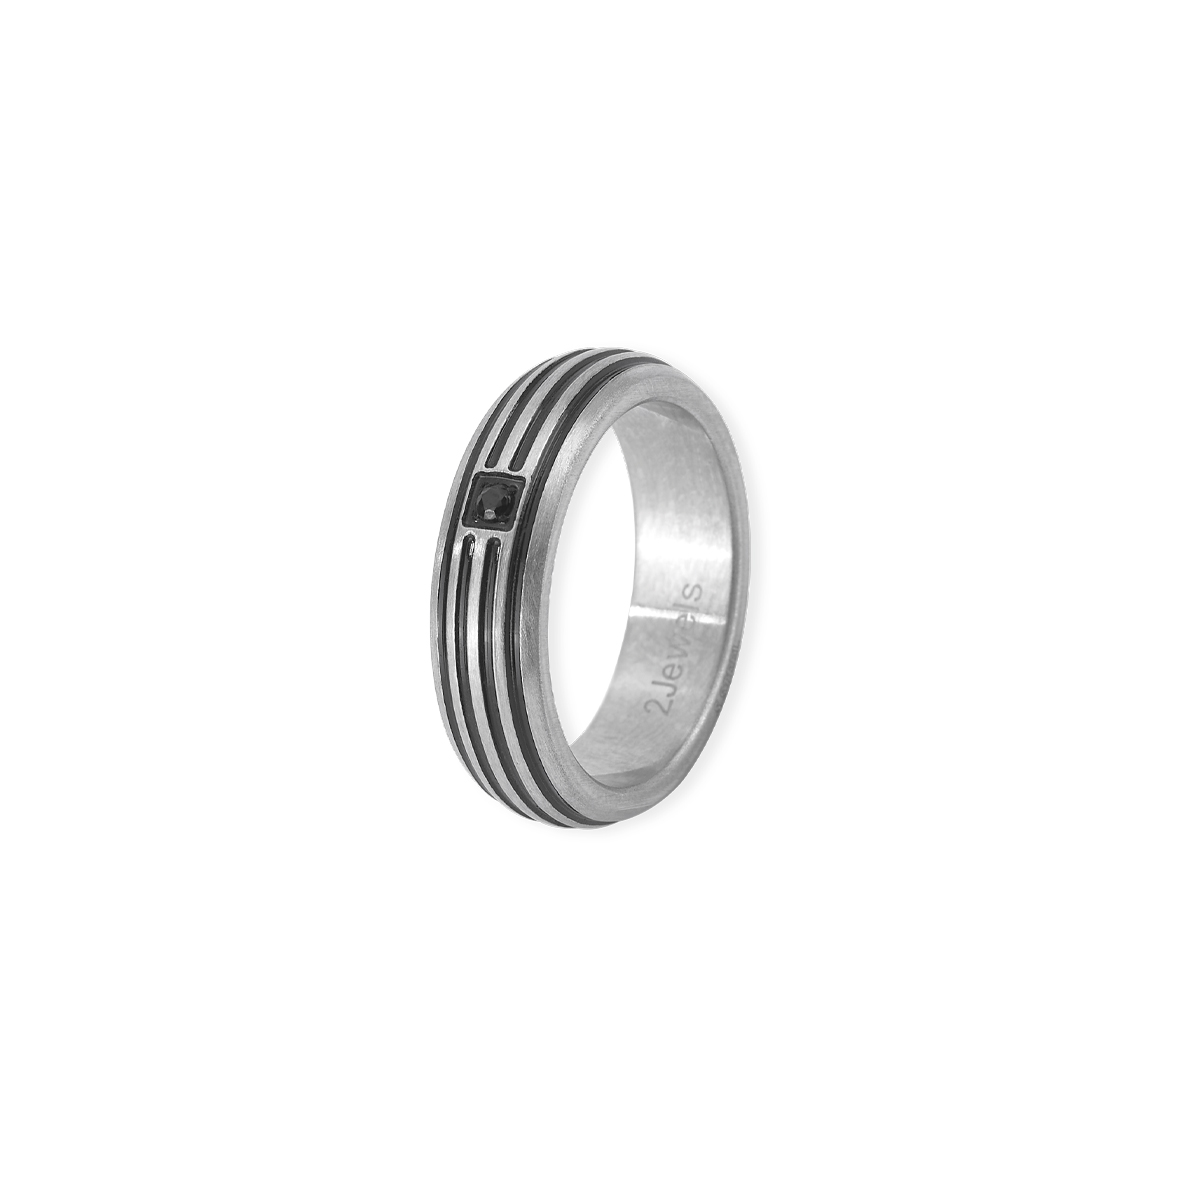 Anello 2Jewels Uomo Man's Ring misura 23 221076-23